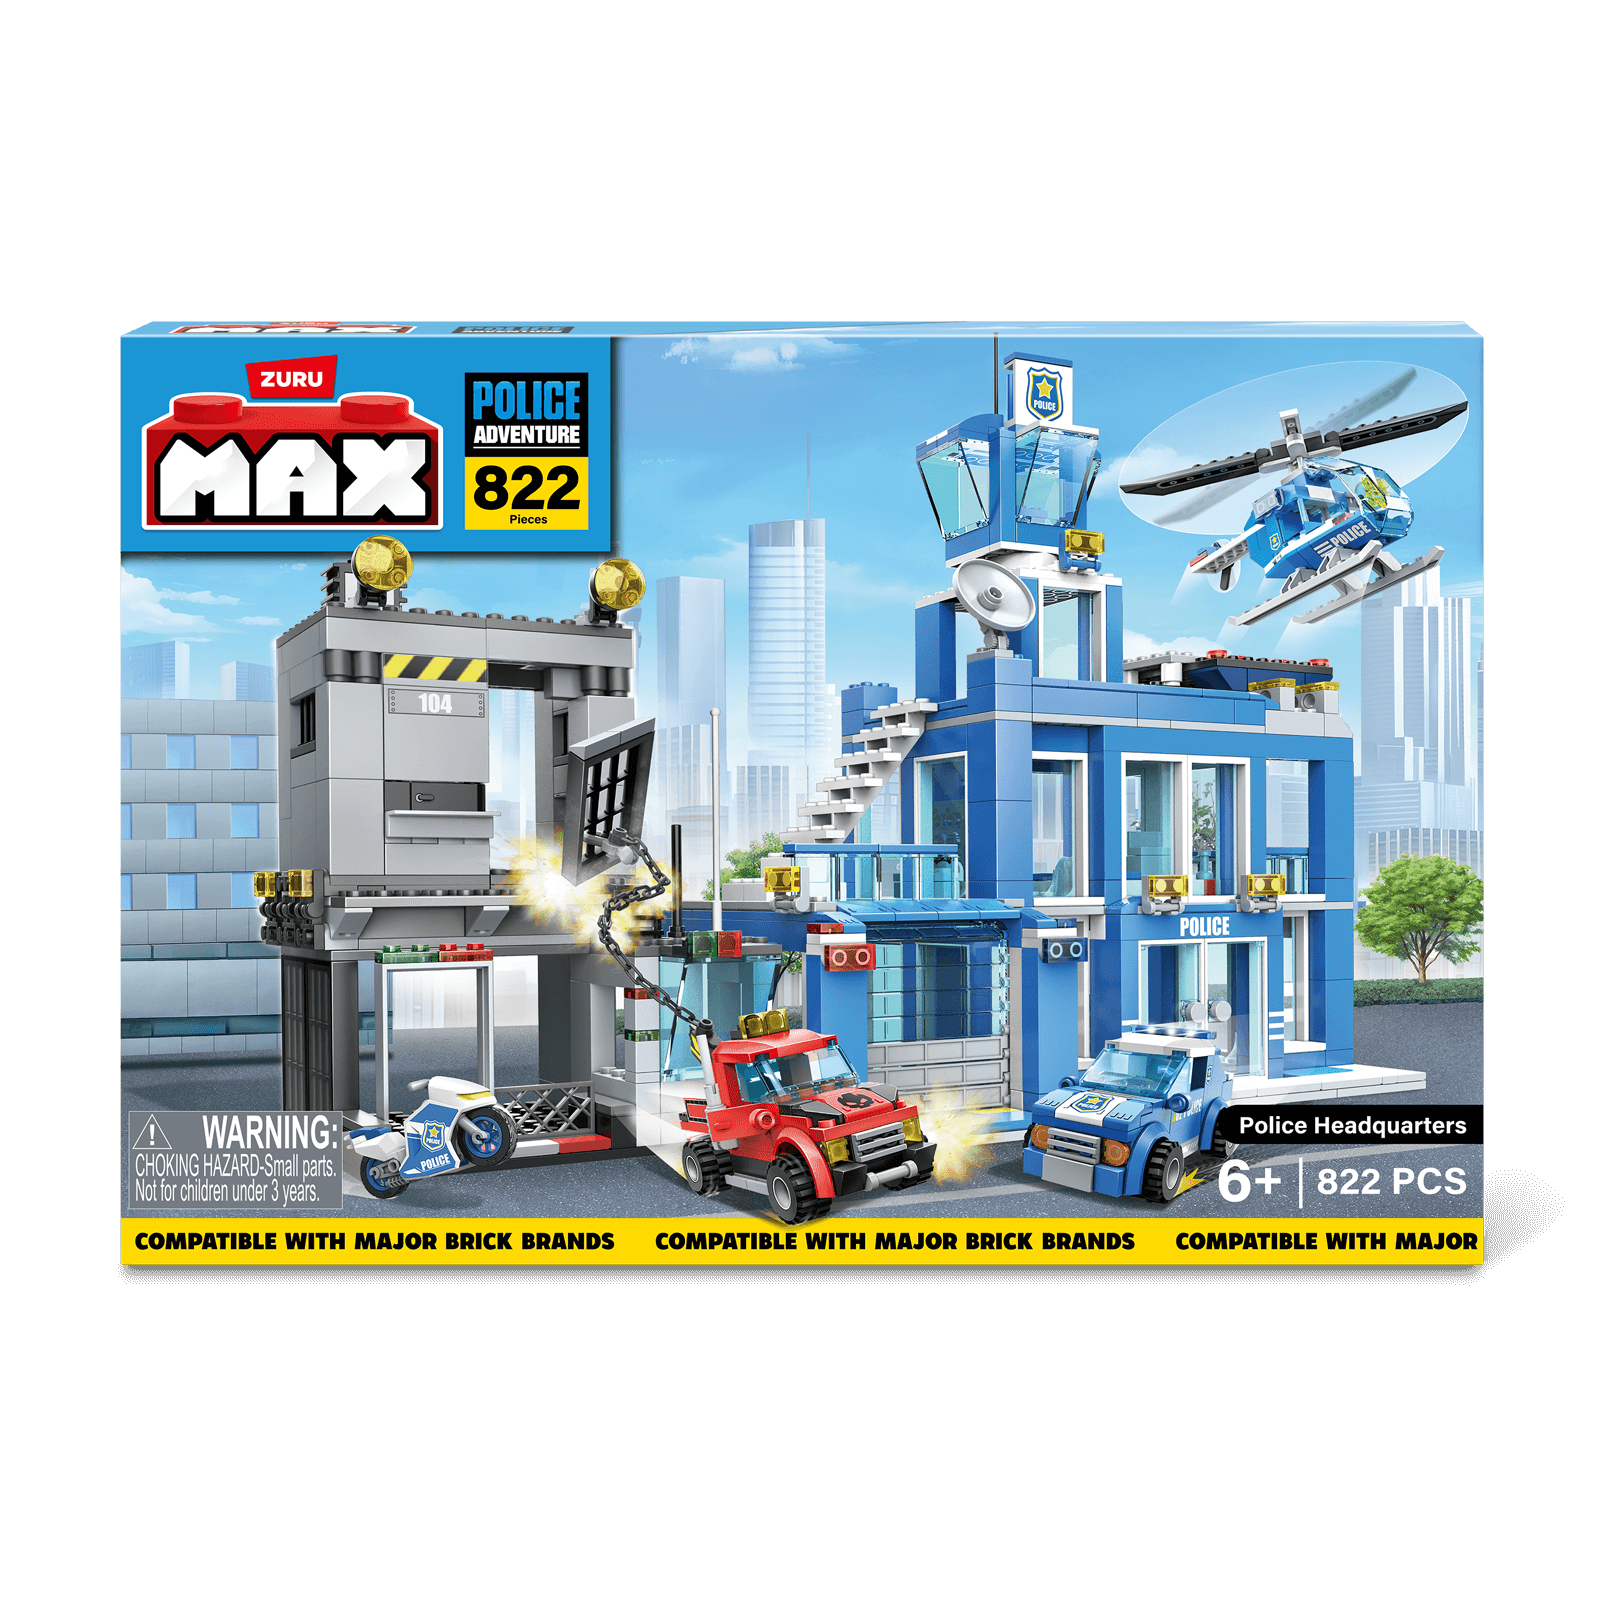 Max Adventure Police Headquarters Playset (822 pieces)